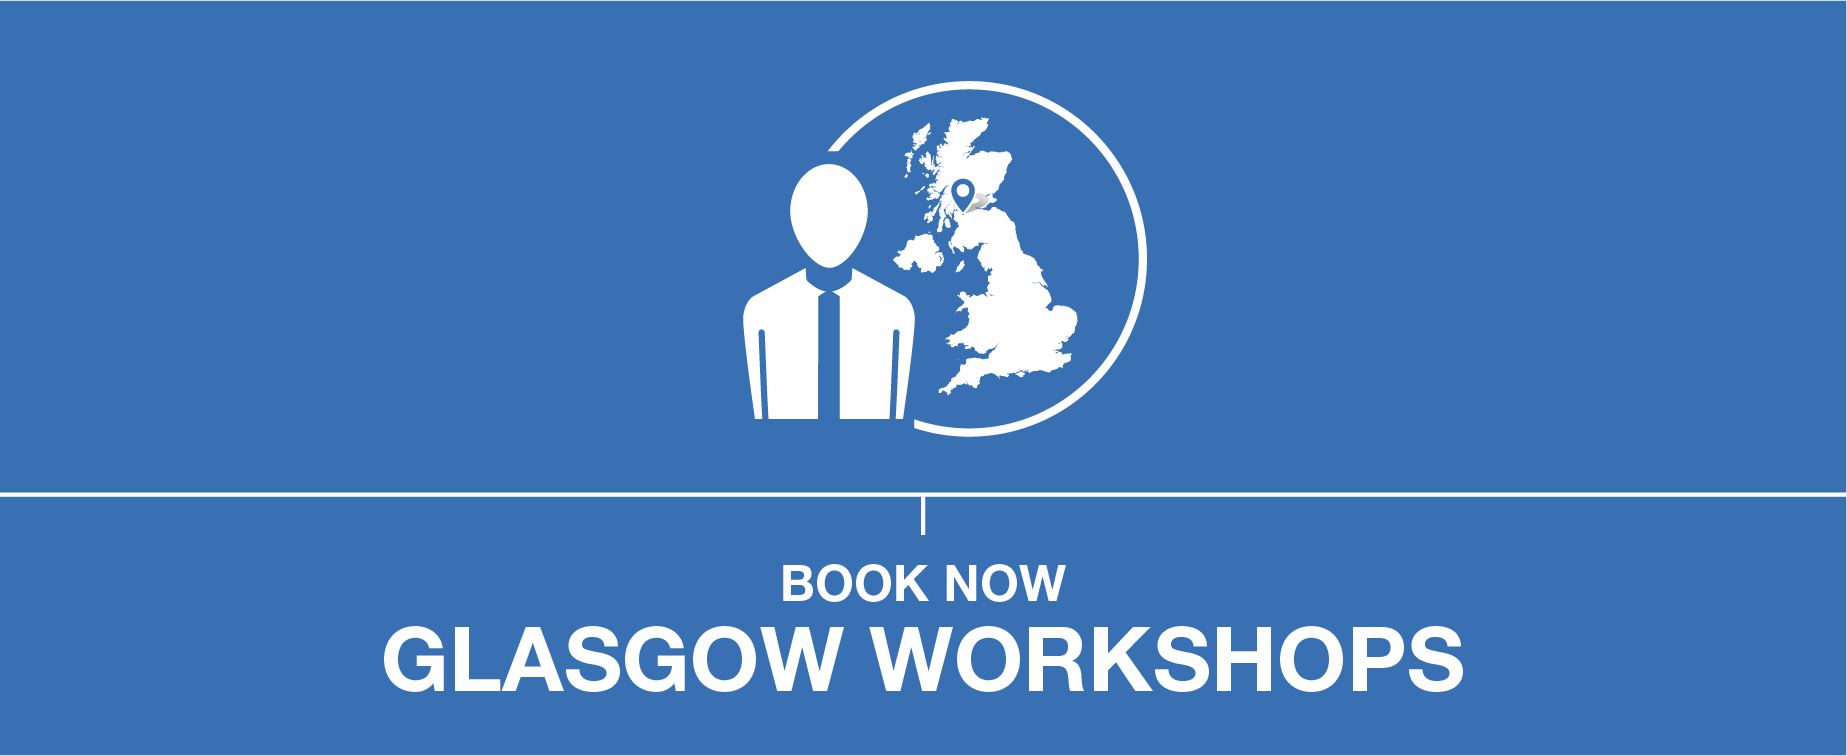 Glasgow workshops